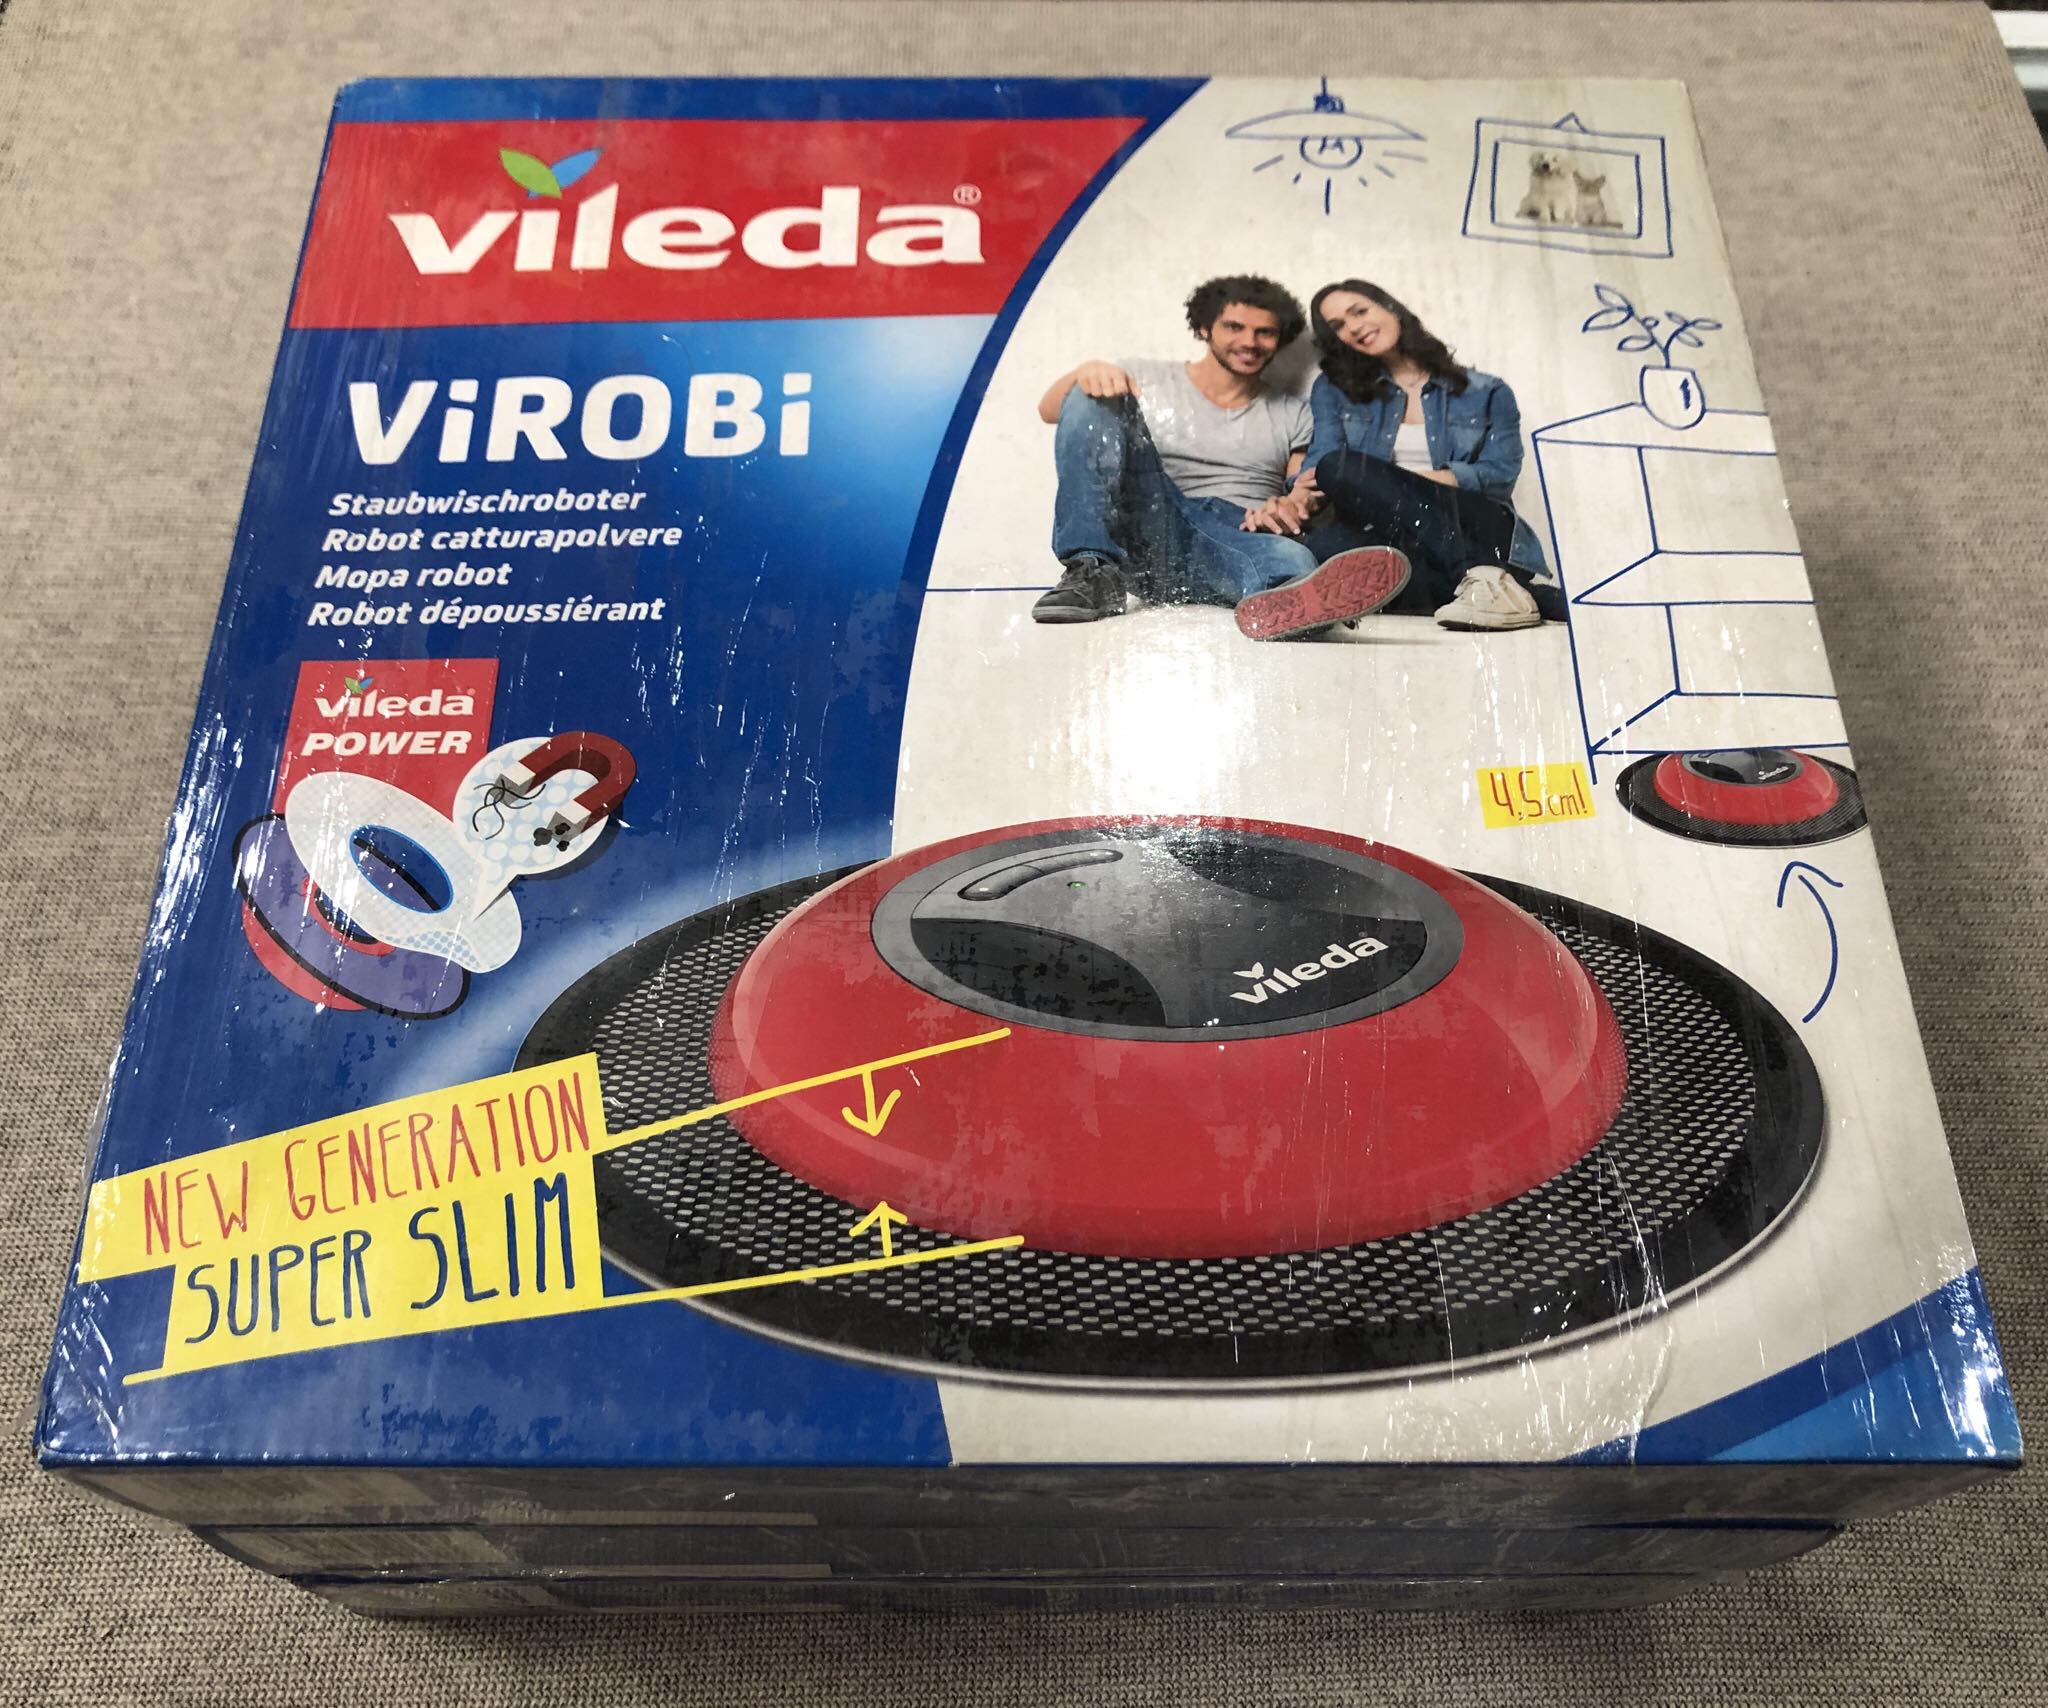 Vileda Virobi Slim - robot dépoussiérant